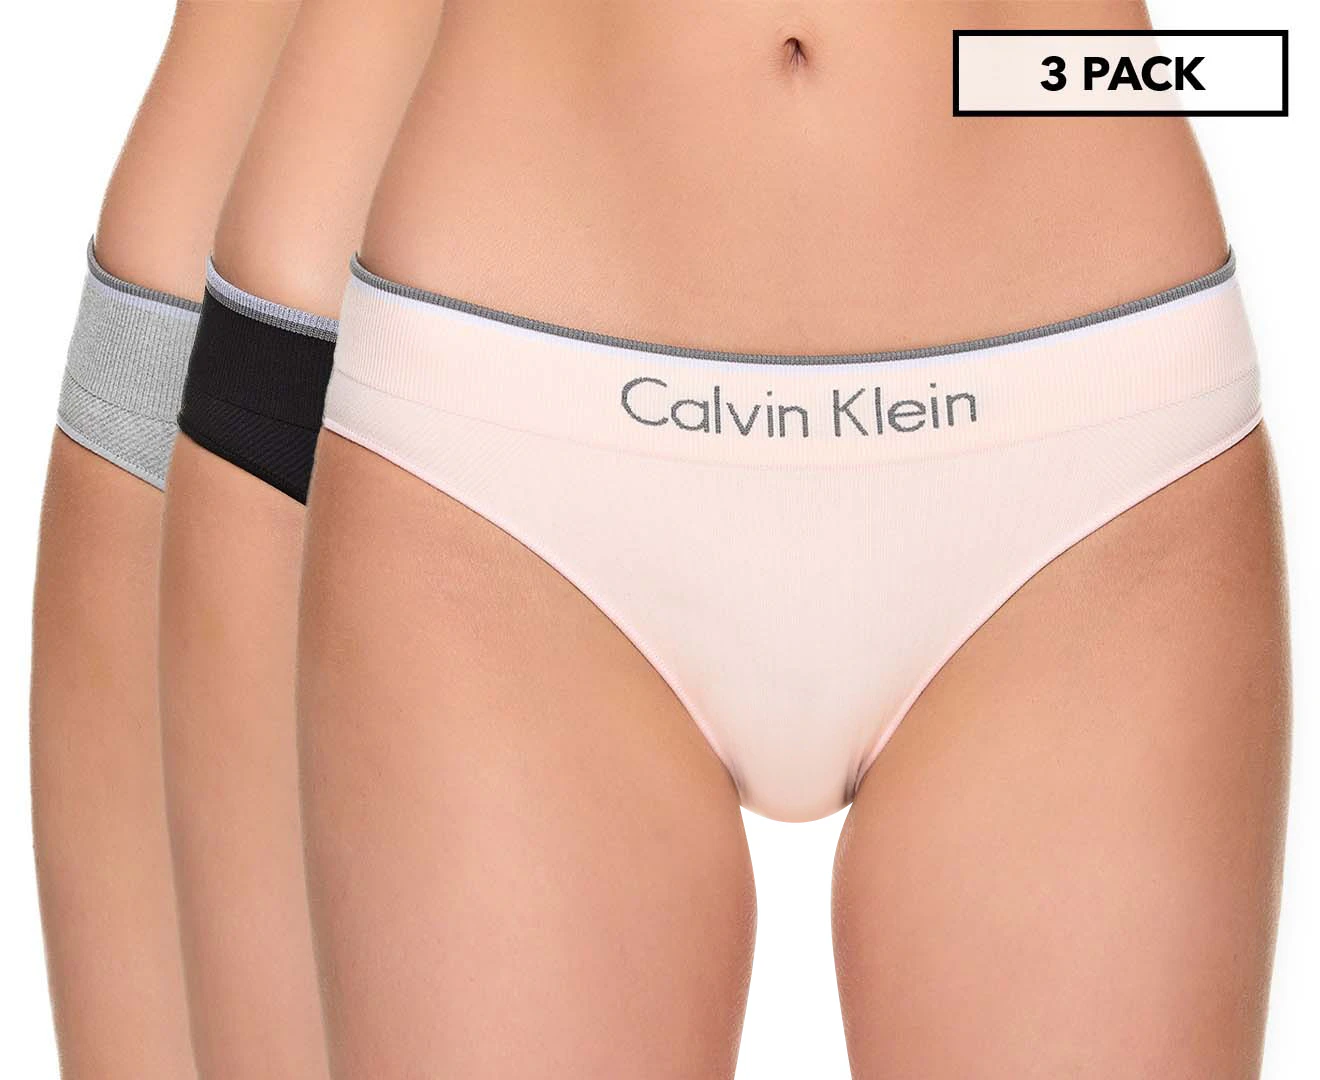 Calvin Klein CK One Logo lace sheer tanga brazilian brief in hot pink